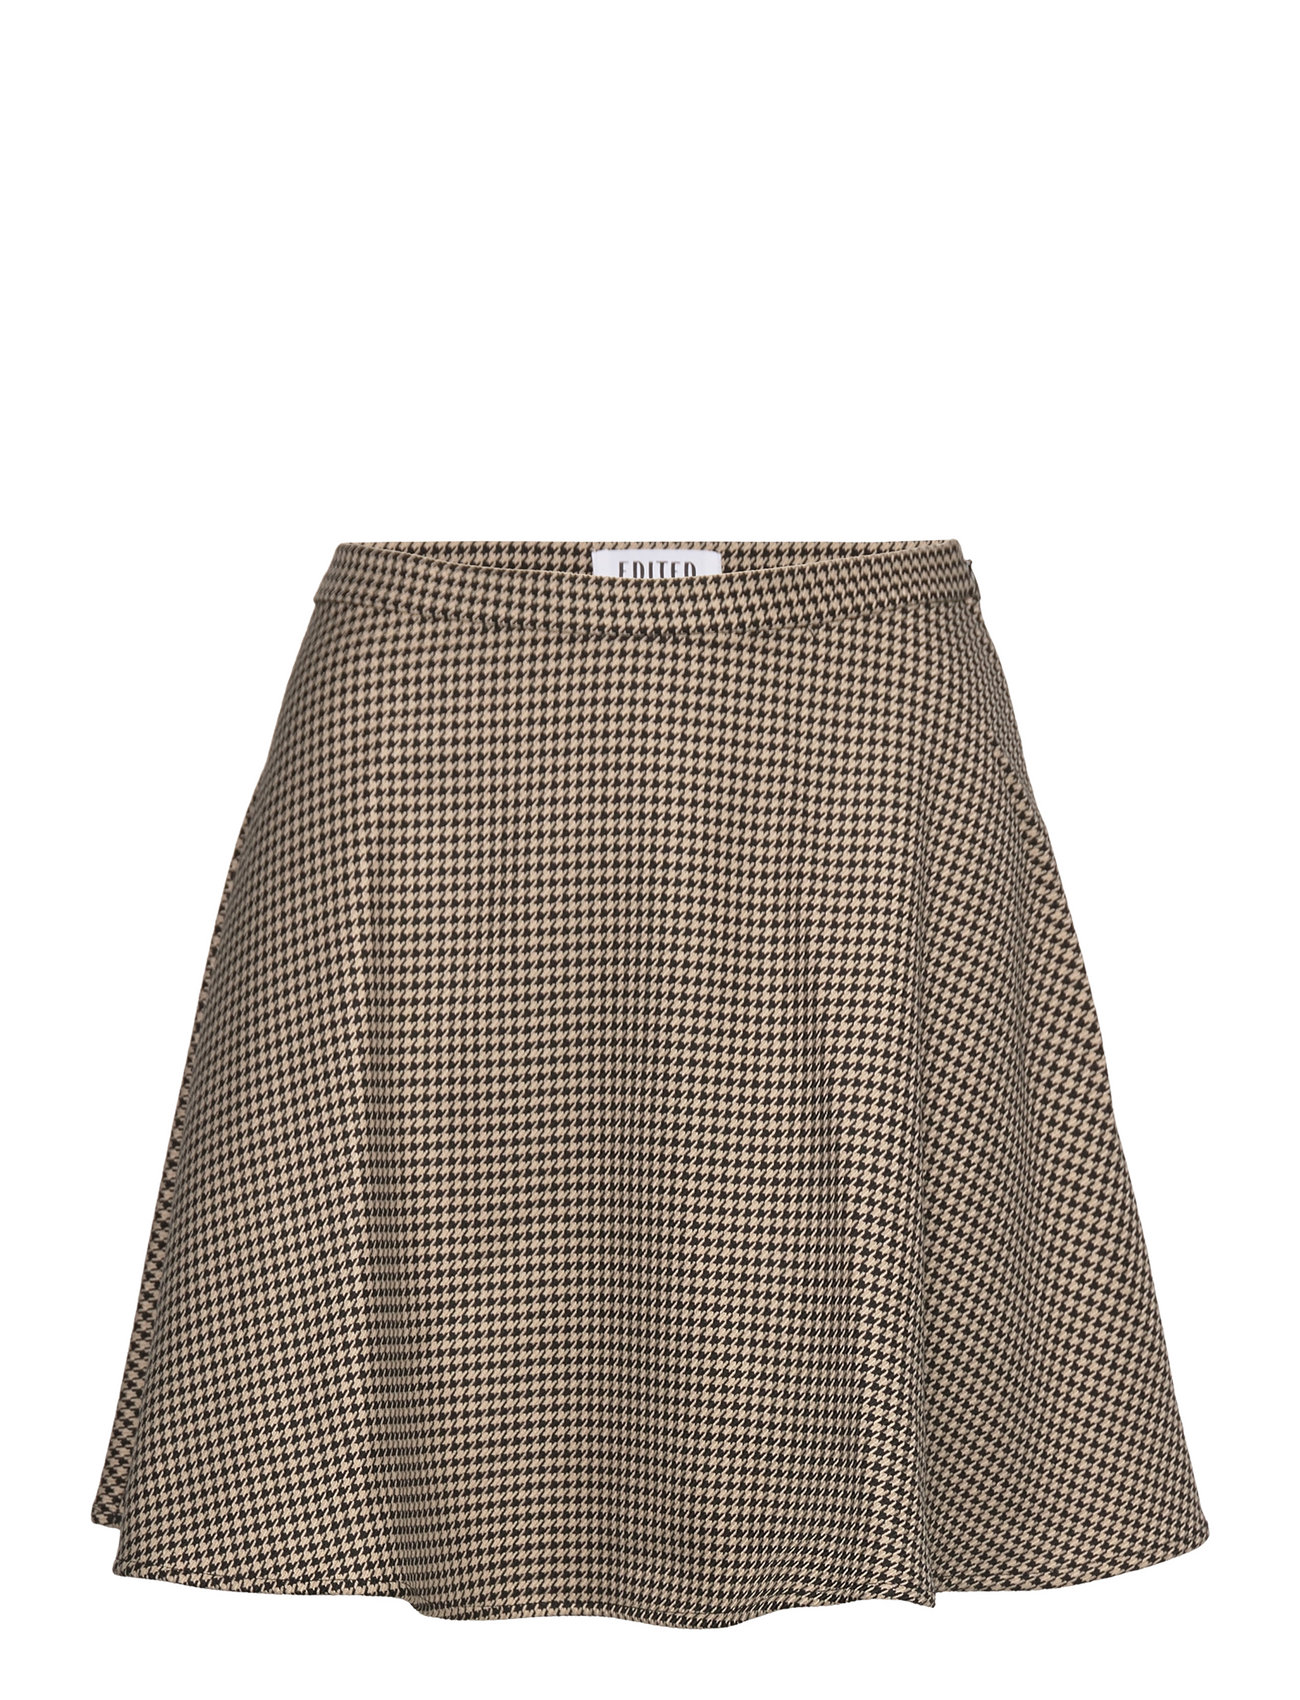 Verenice Skirt Kort Kjol Multi/mönstrad EDITED